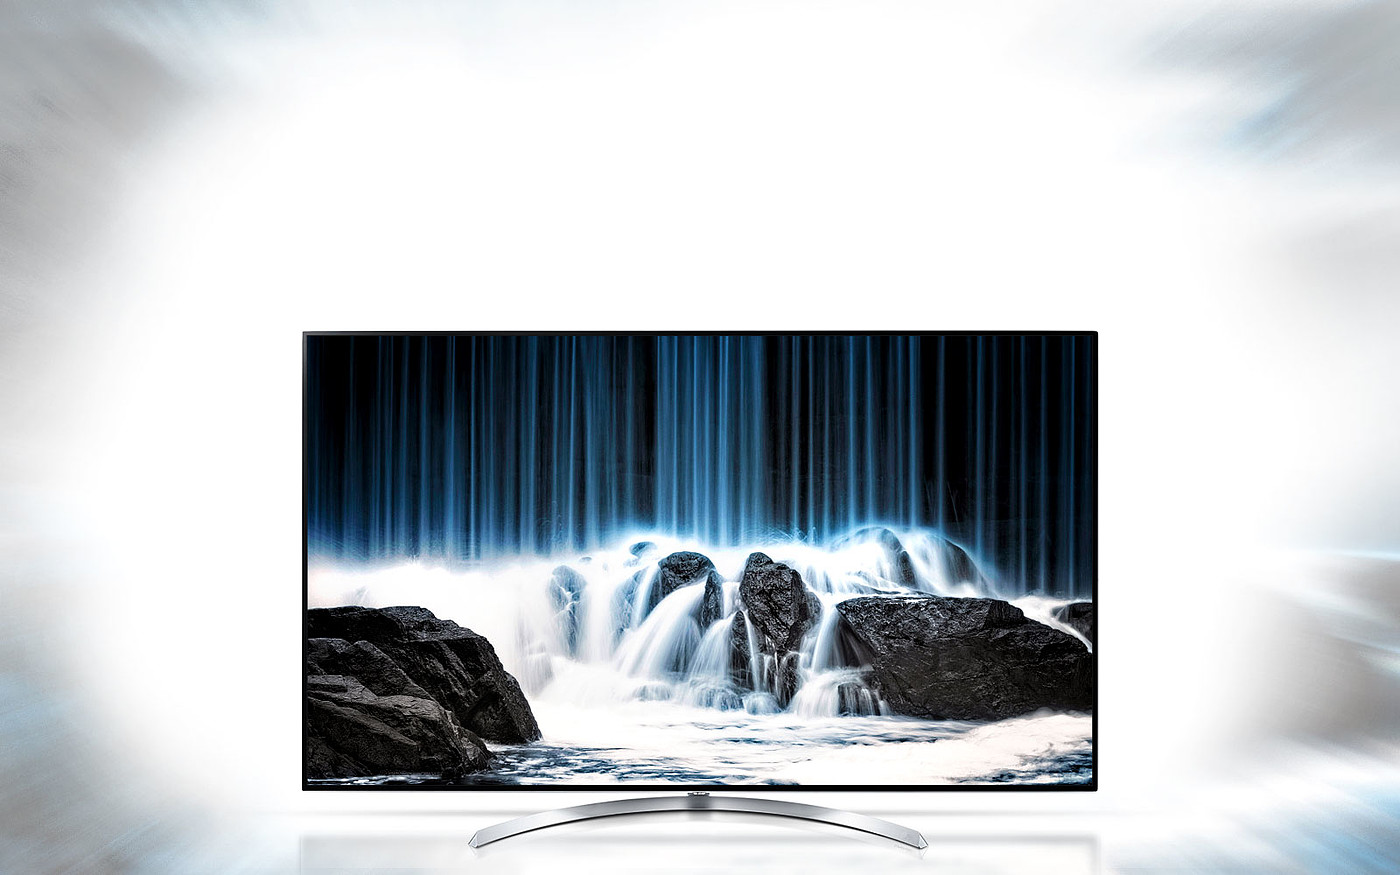 65SJ9500，lg，电视，纯色硬屏，